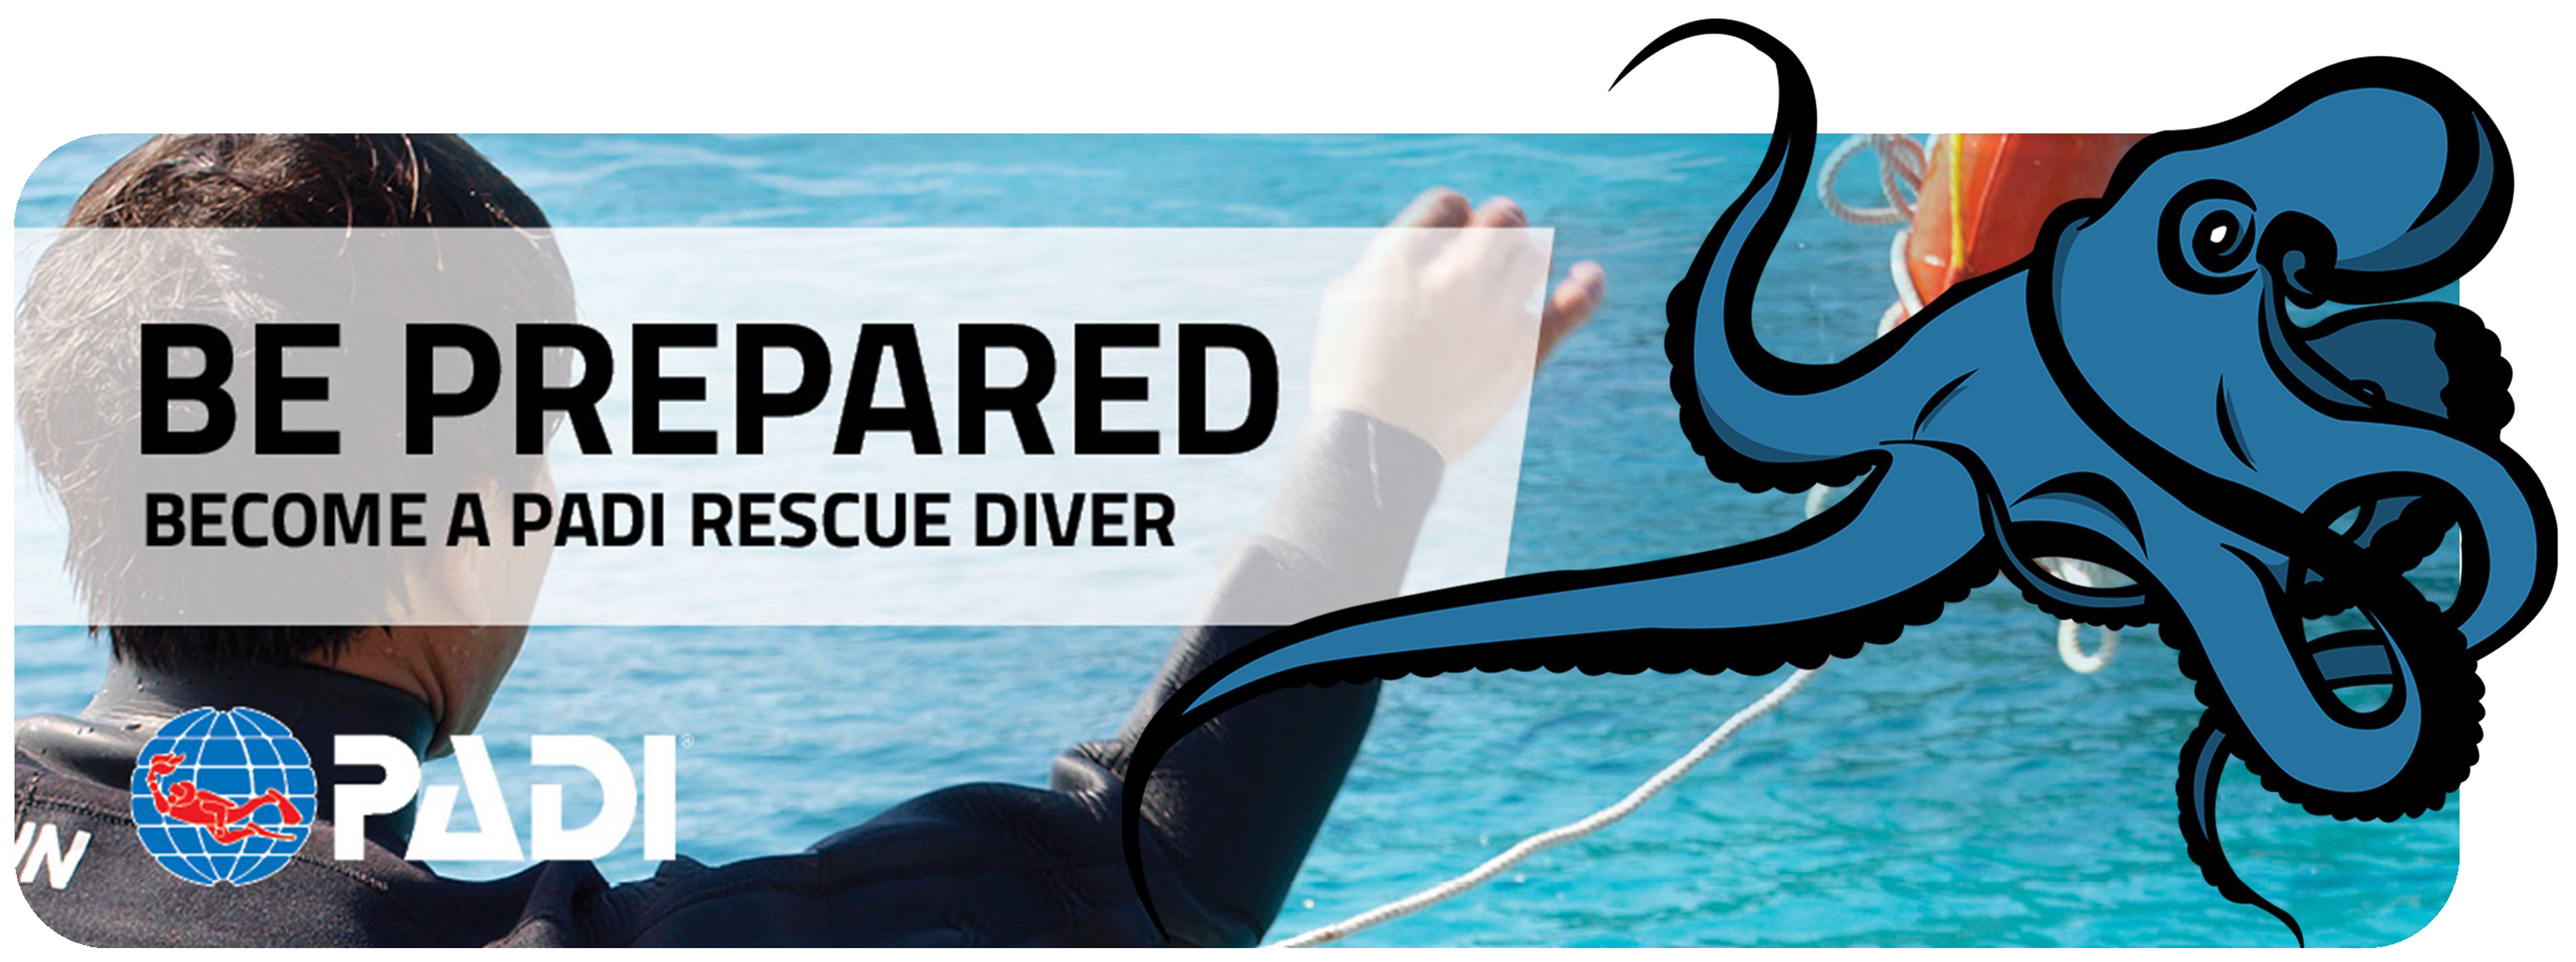 Rescue Diver Assisting A Diver In Distress